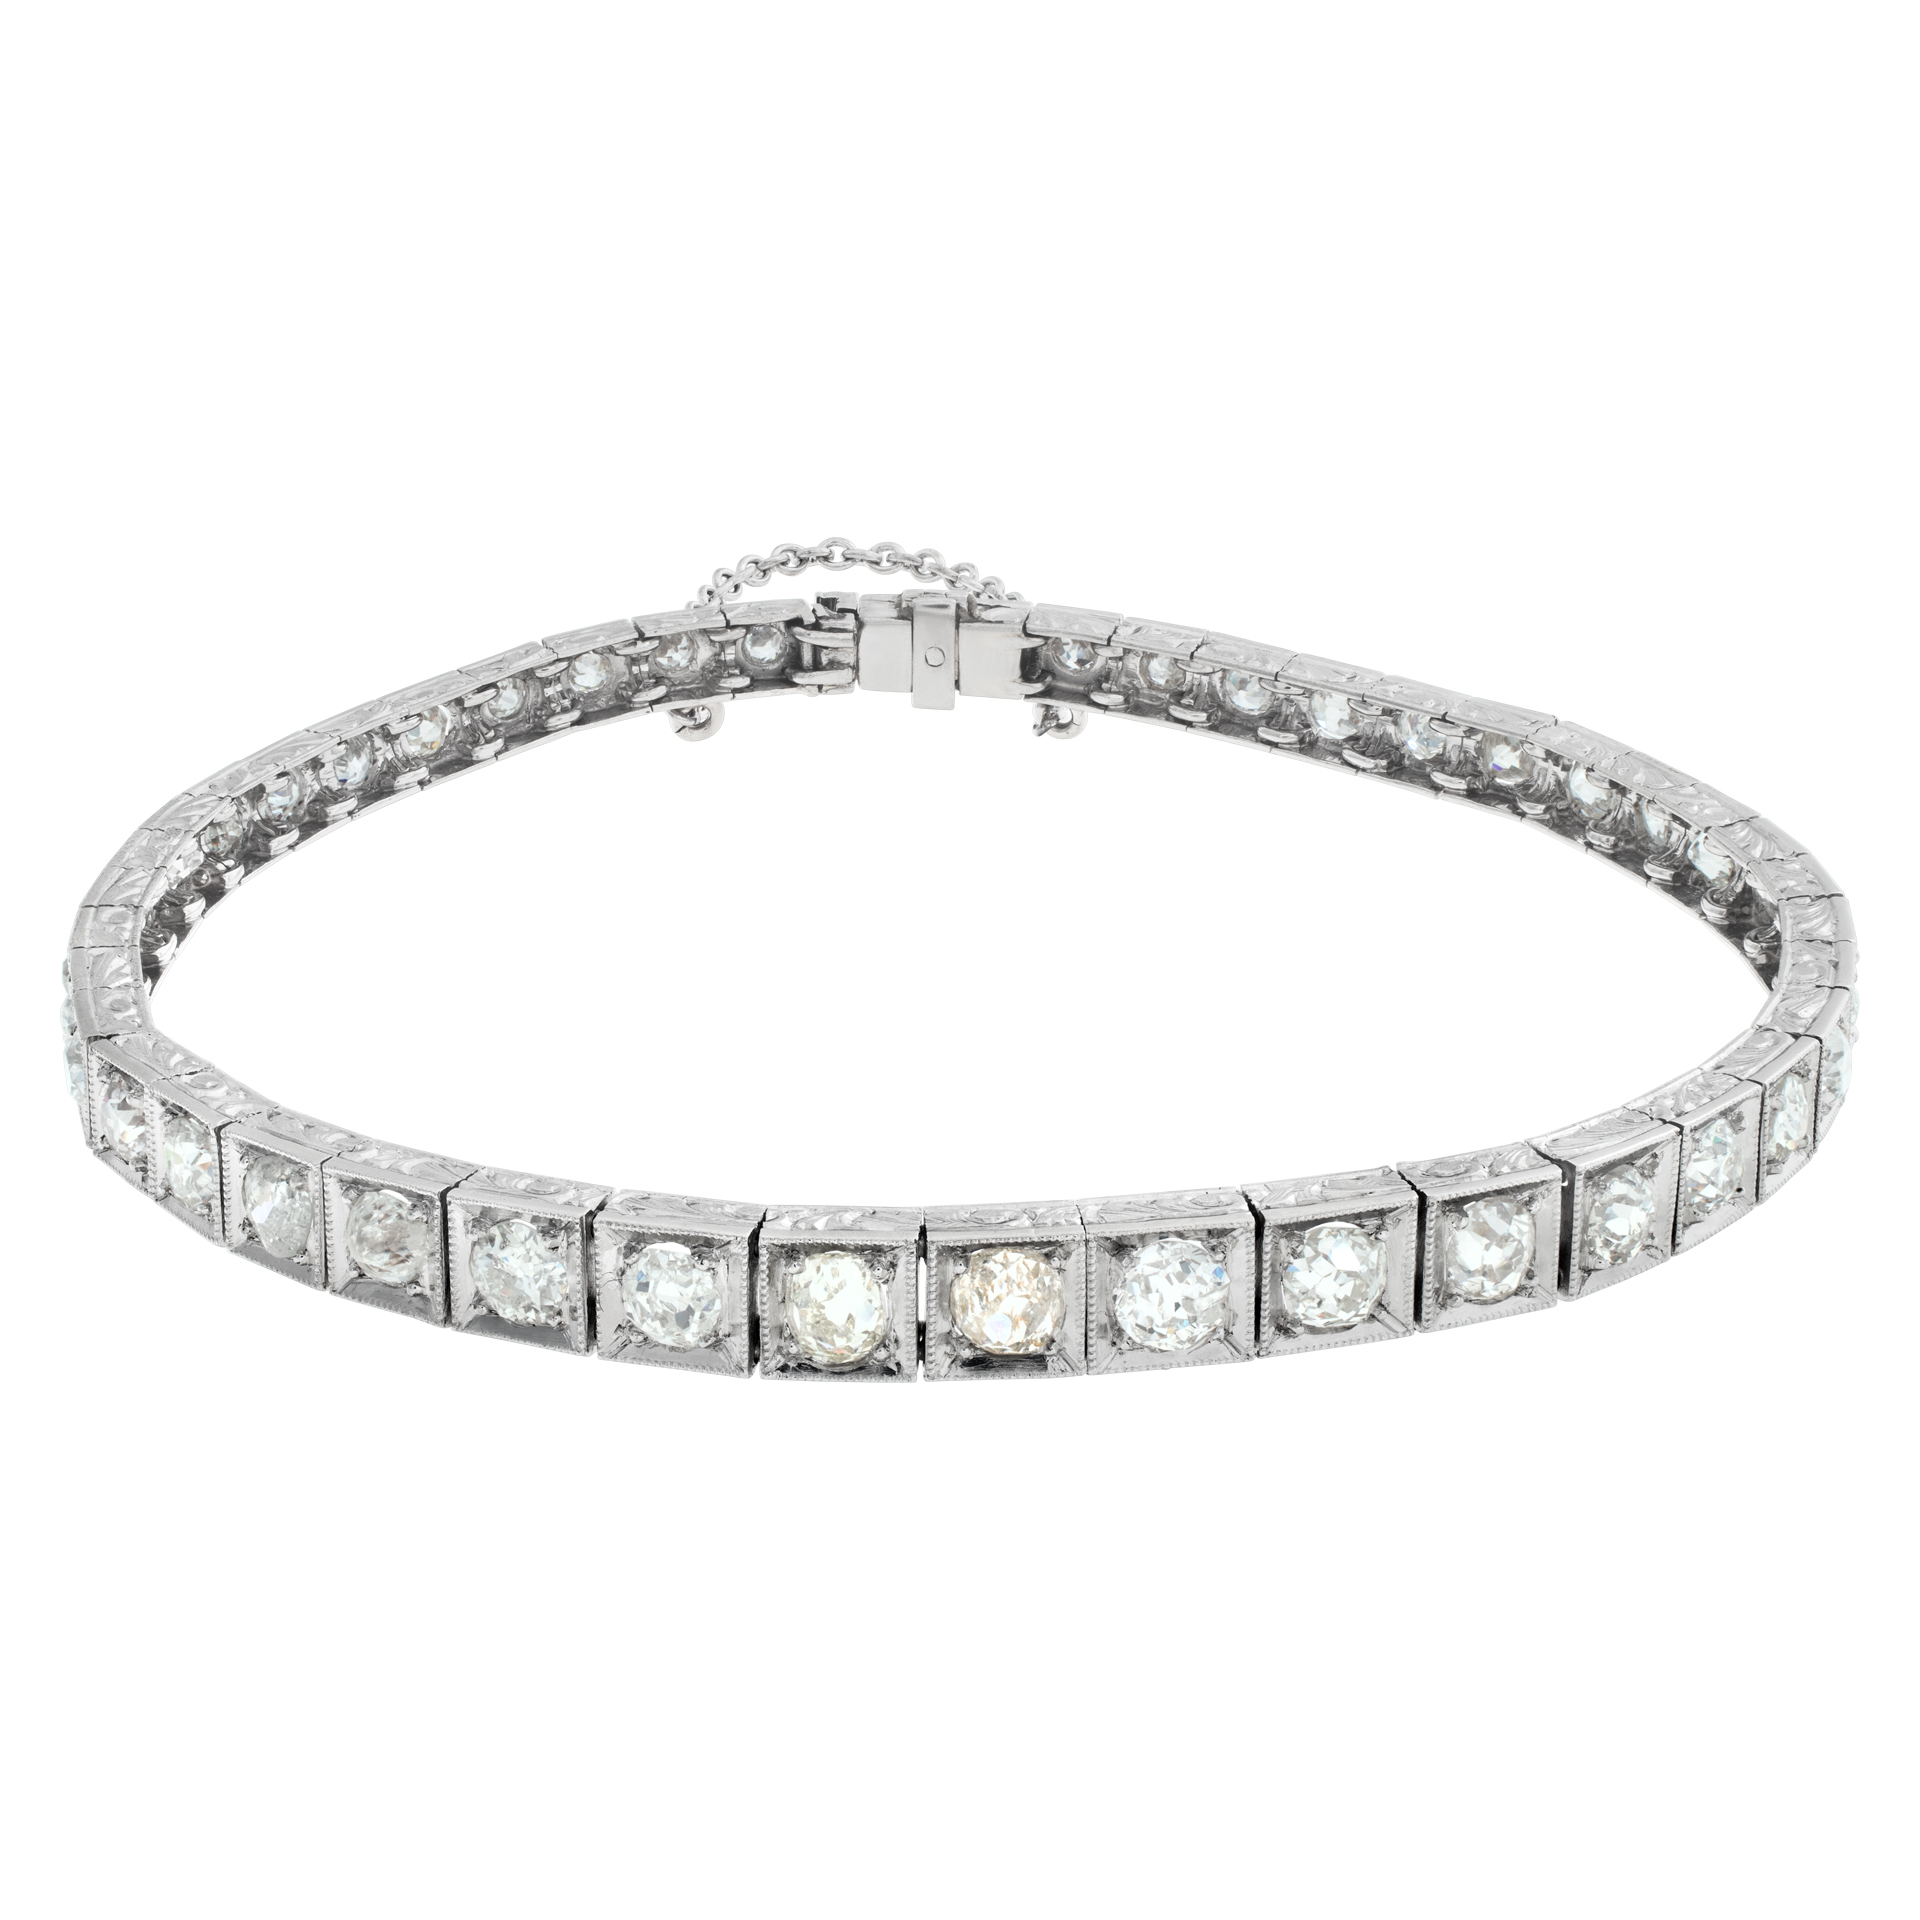 Vintage style platinum diamond line bracelet with almost 4 carats in rose cut diamonds